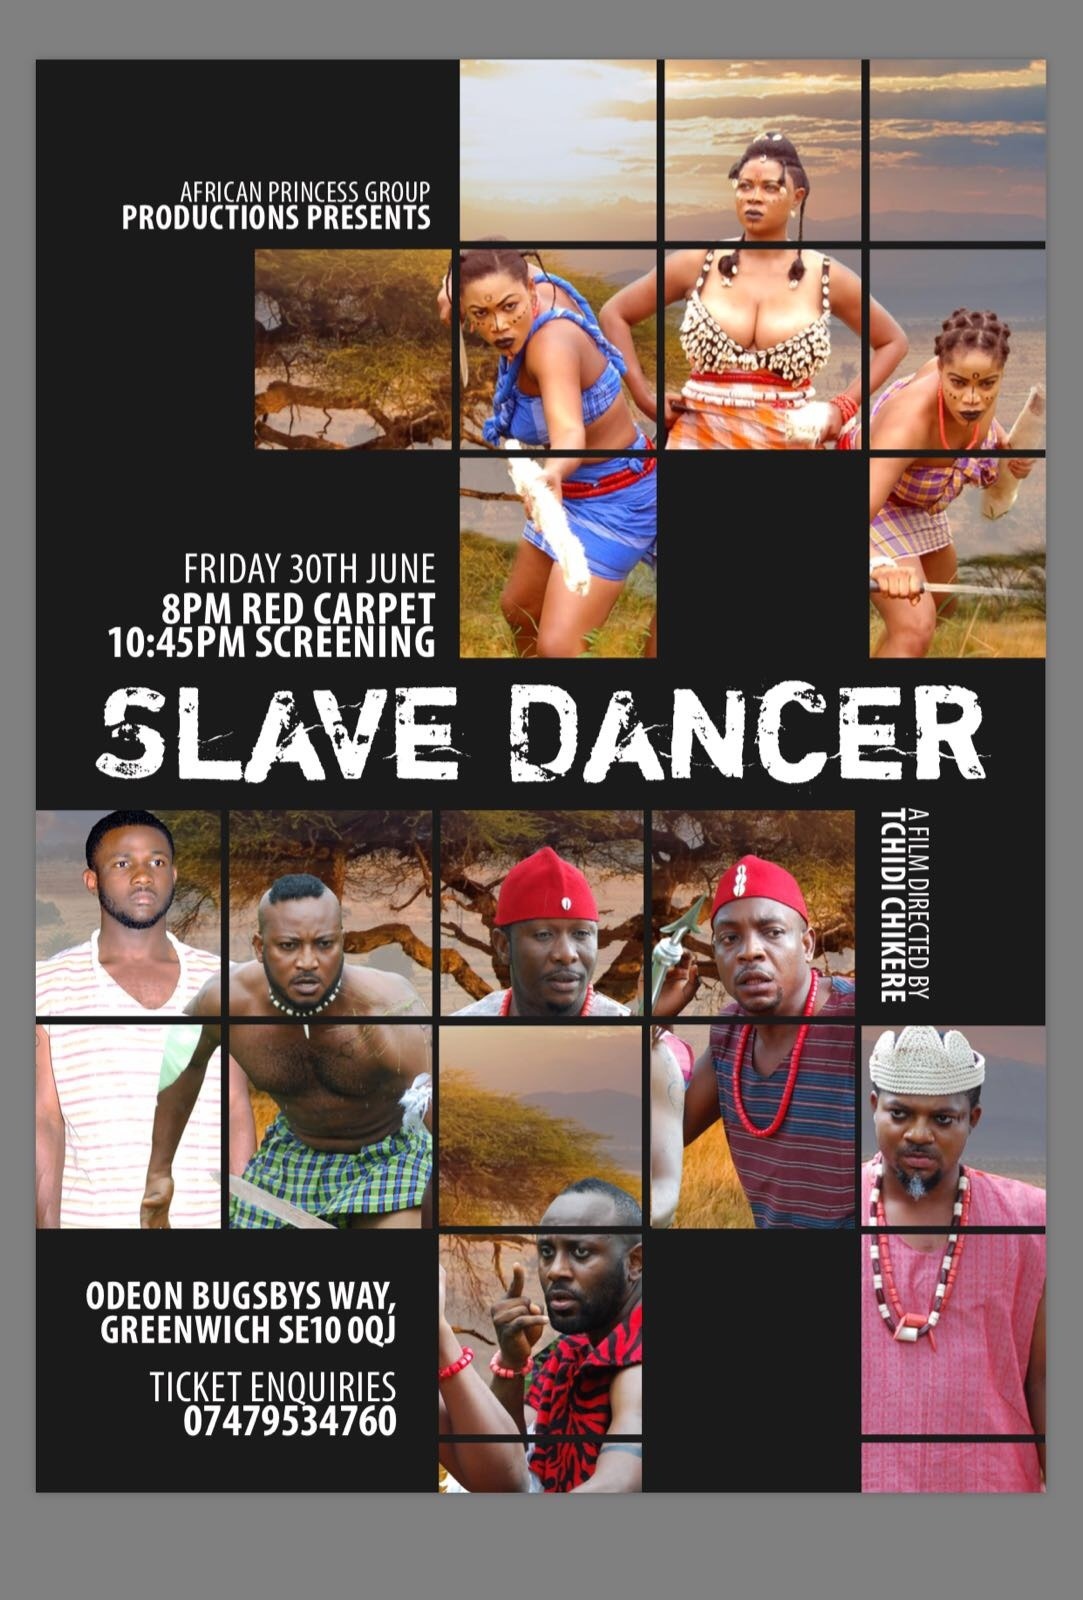 Movie Premiere "Slave Dancer" a Story of Post War Survival